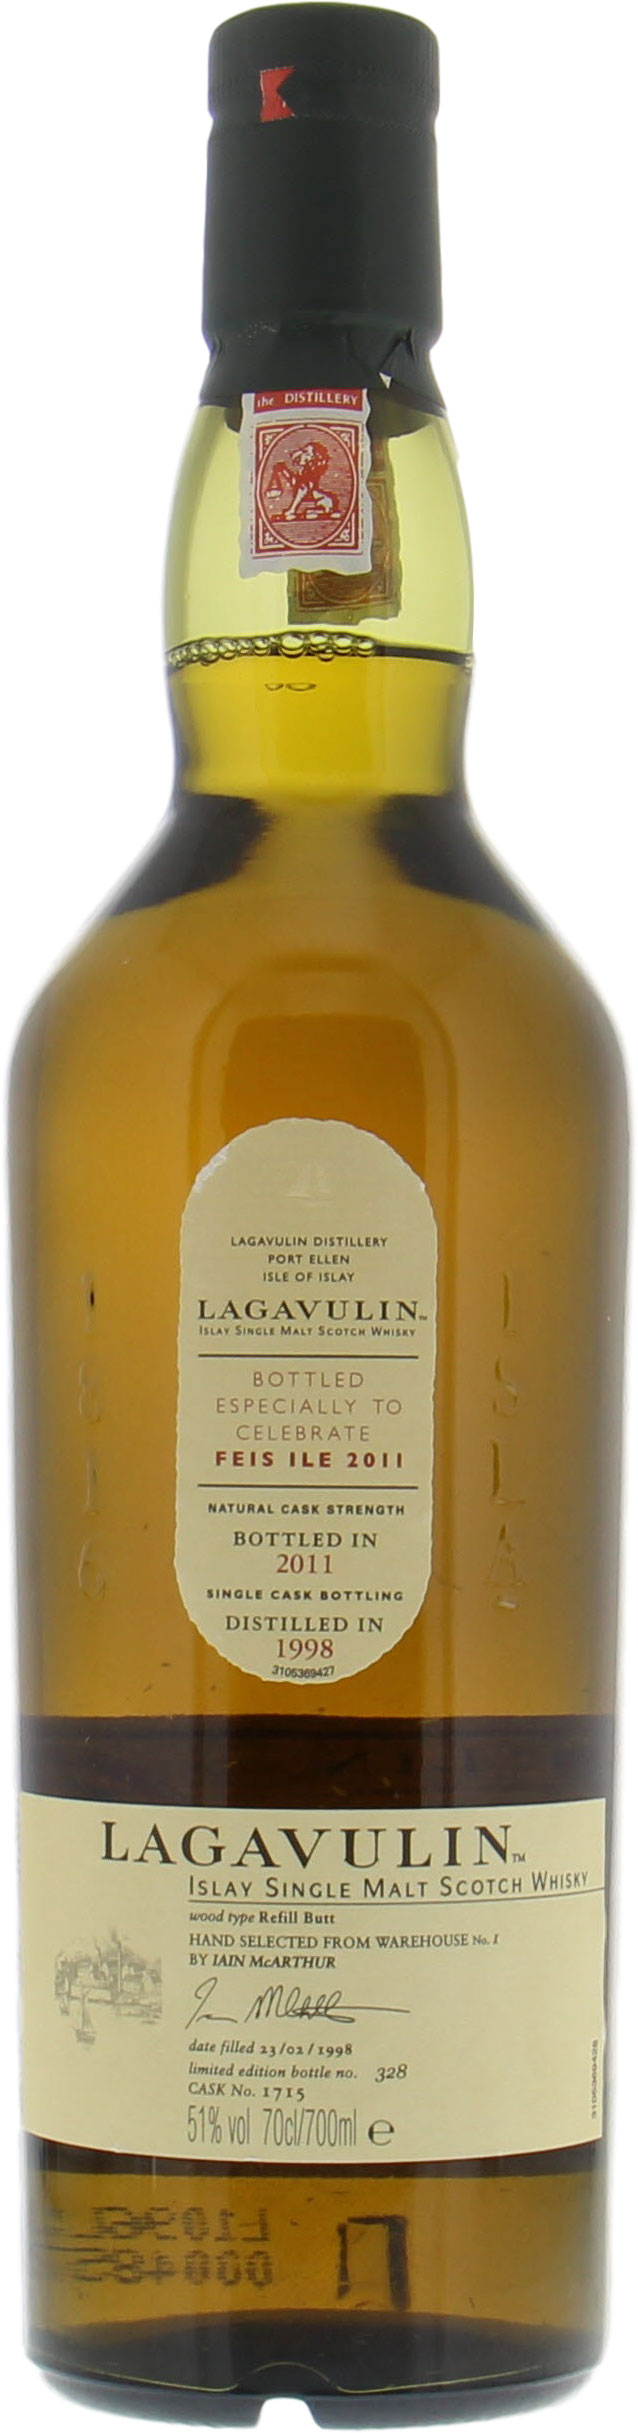 Lagavulin - Feis Ile 2011 13 Years Old  Cask 1715 51% 1998 Nederlands 10002